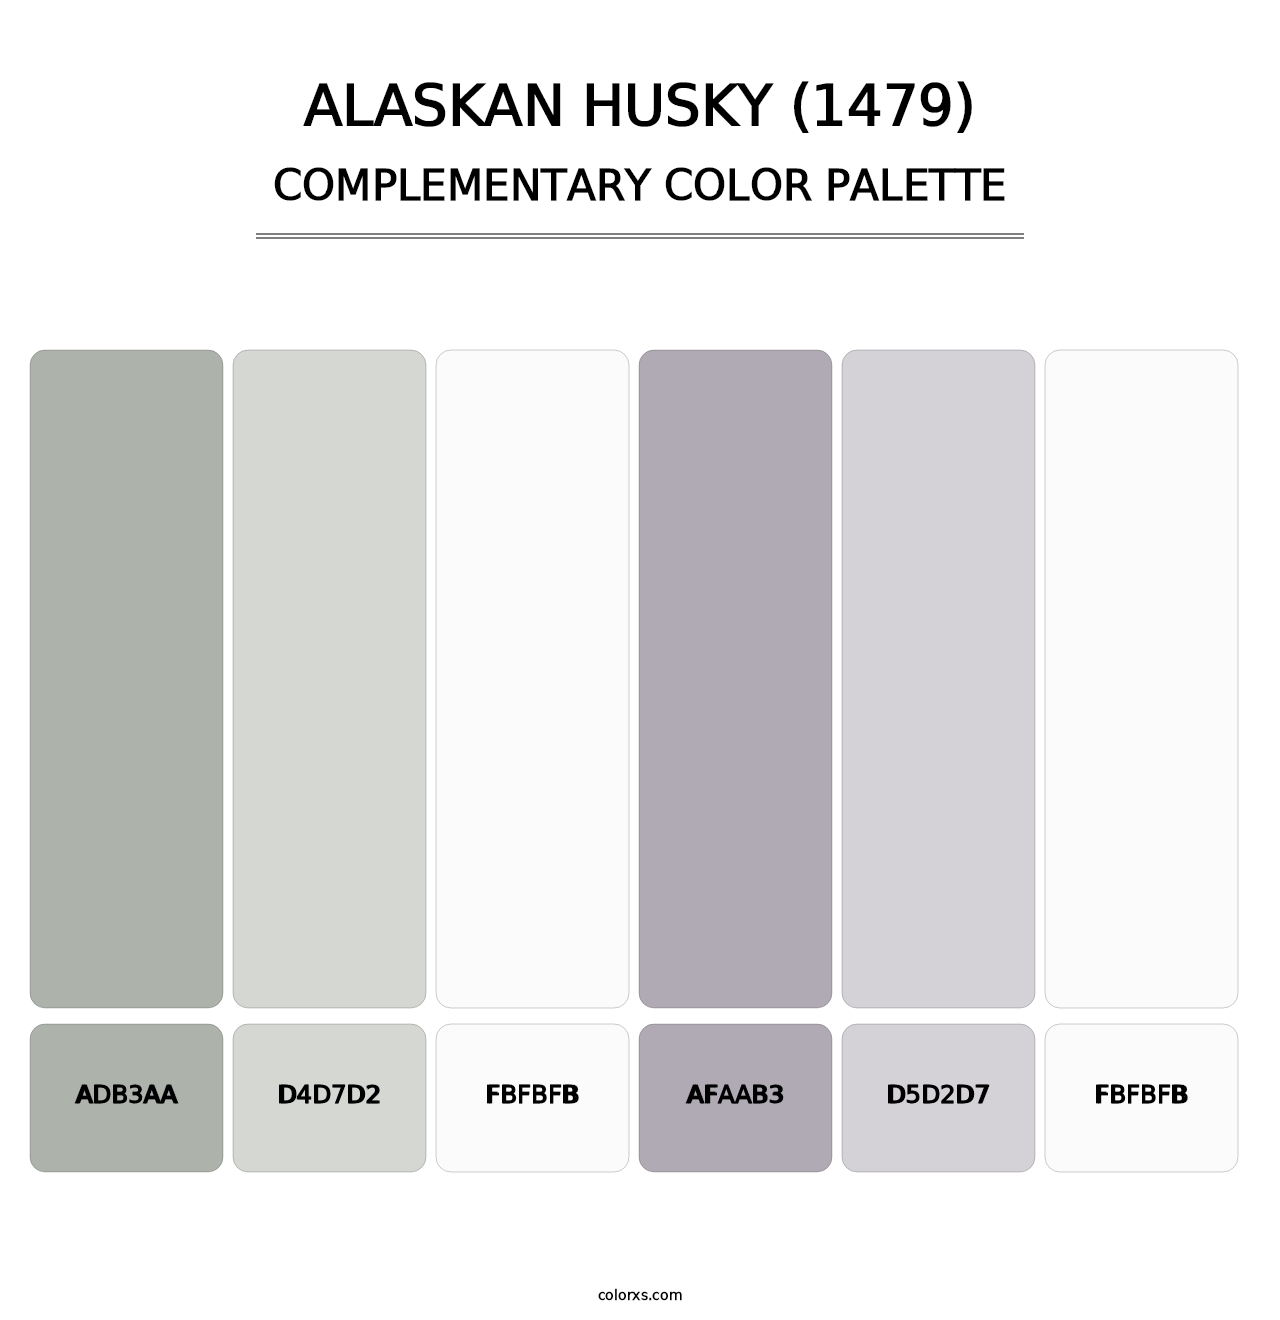 Alaskan Husky (1479) - Complementary Color Palette